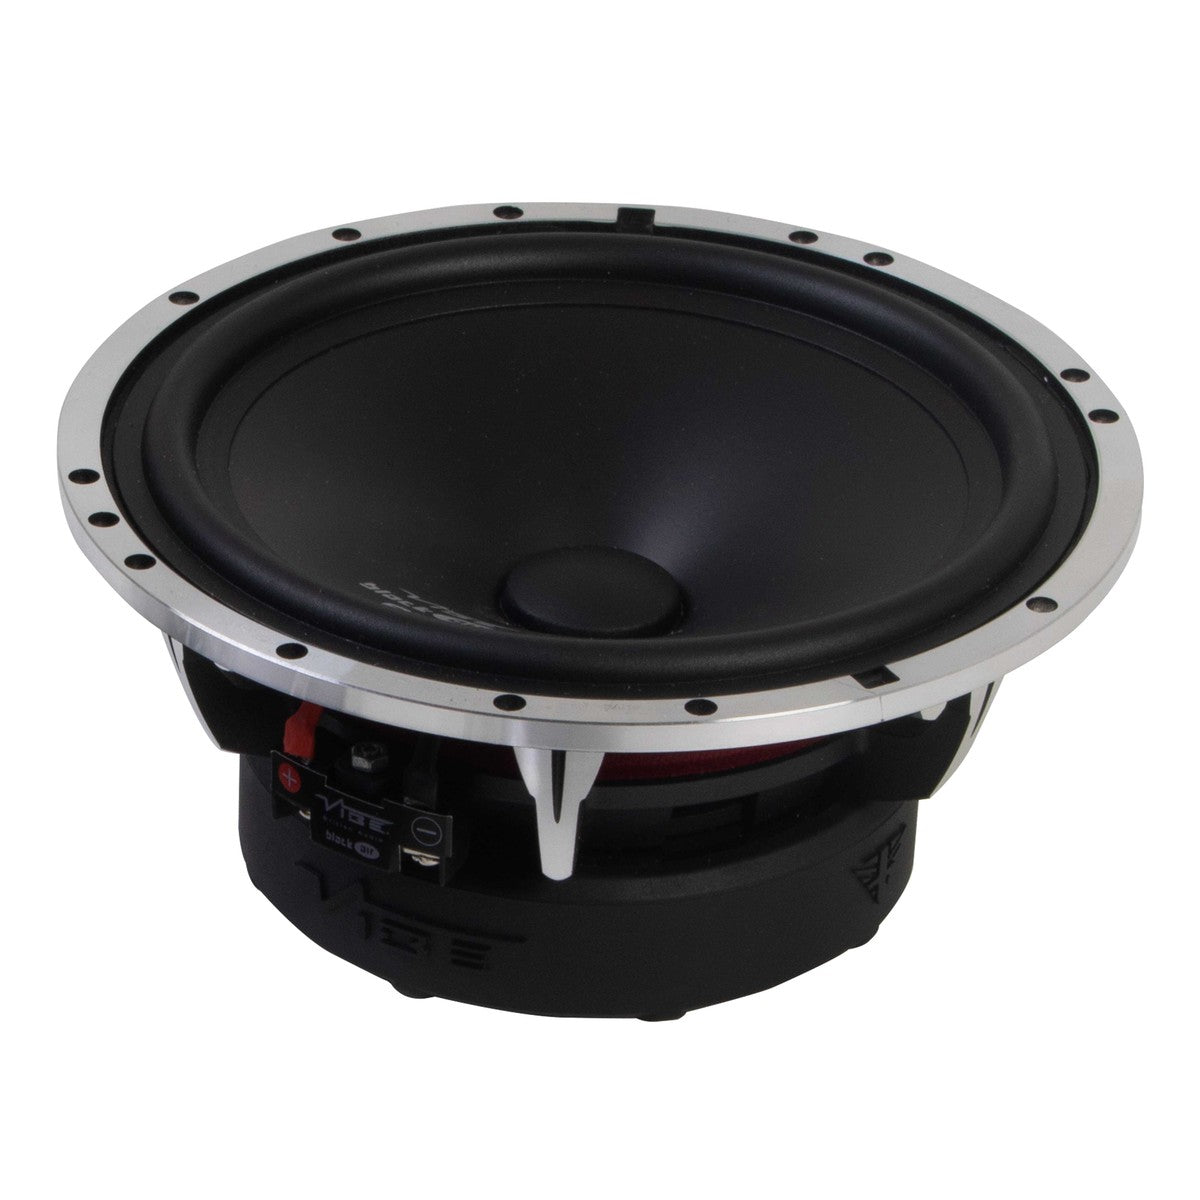 Vibe Audio-Blackair 6C-V0-6.5" (16,5cm) Speaker Set-Masori.de